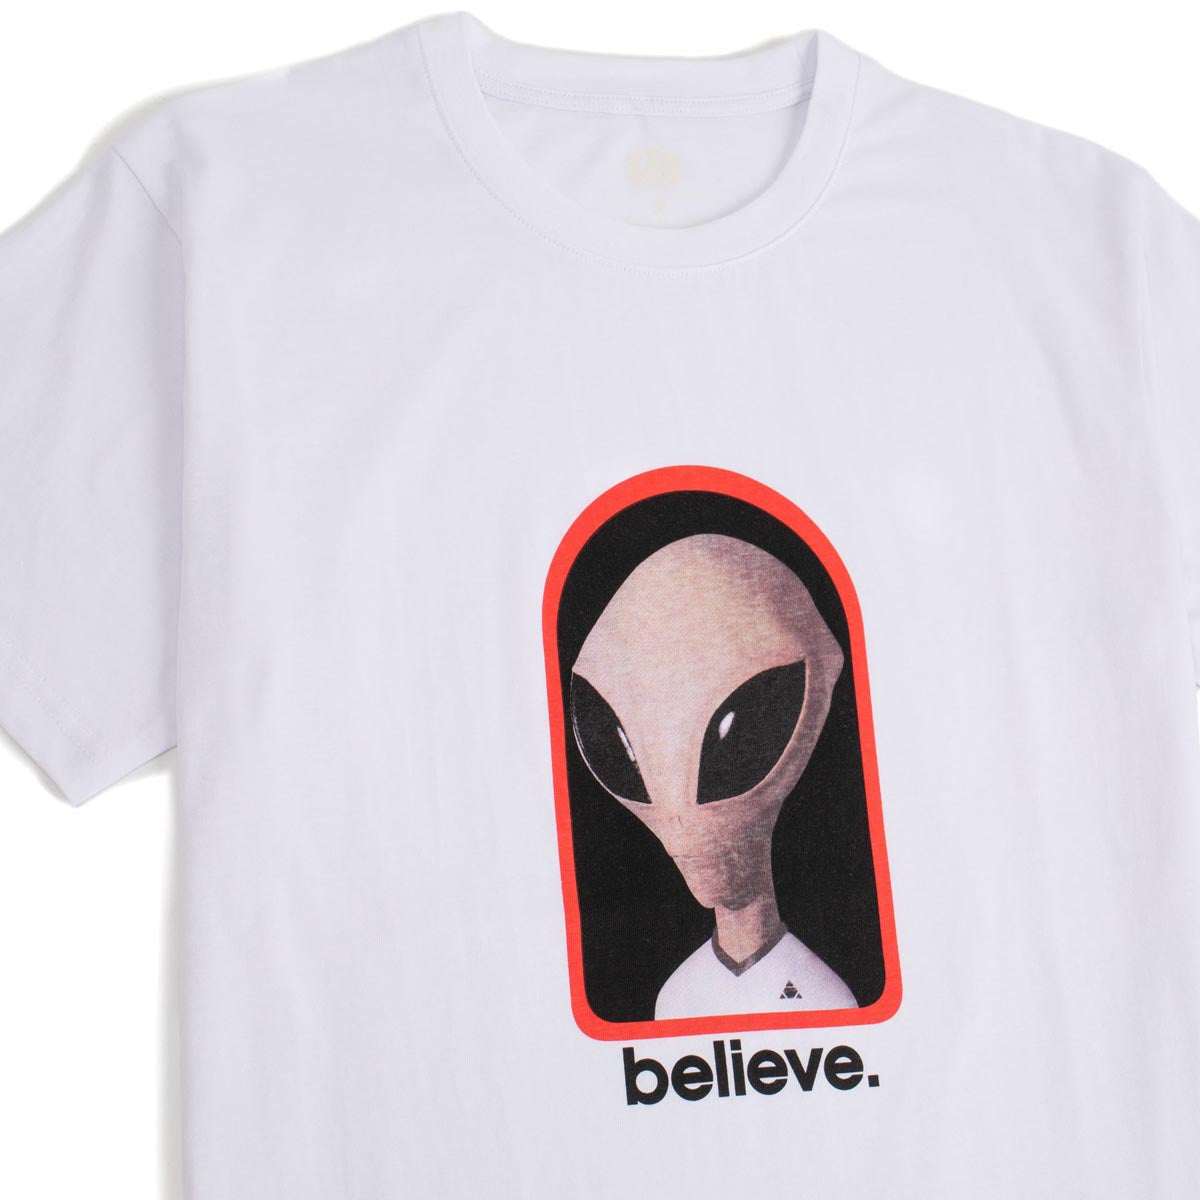 Alien Workshop Believe Reality T-Shirt - White image 2